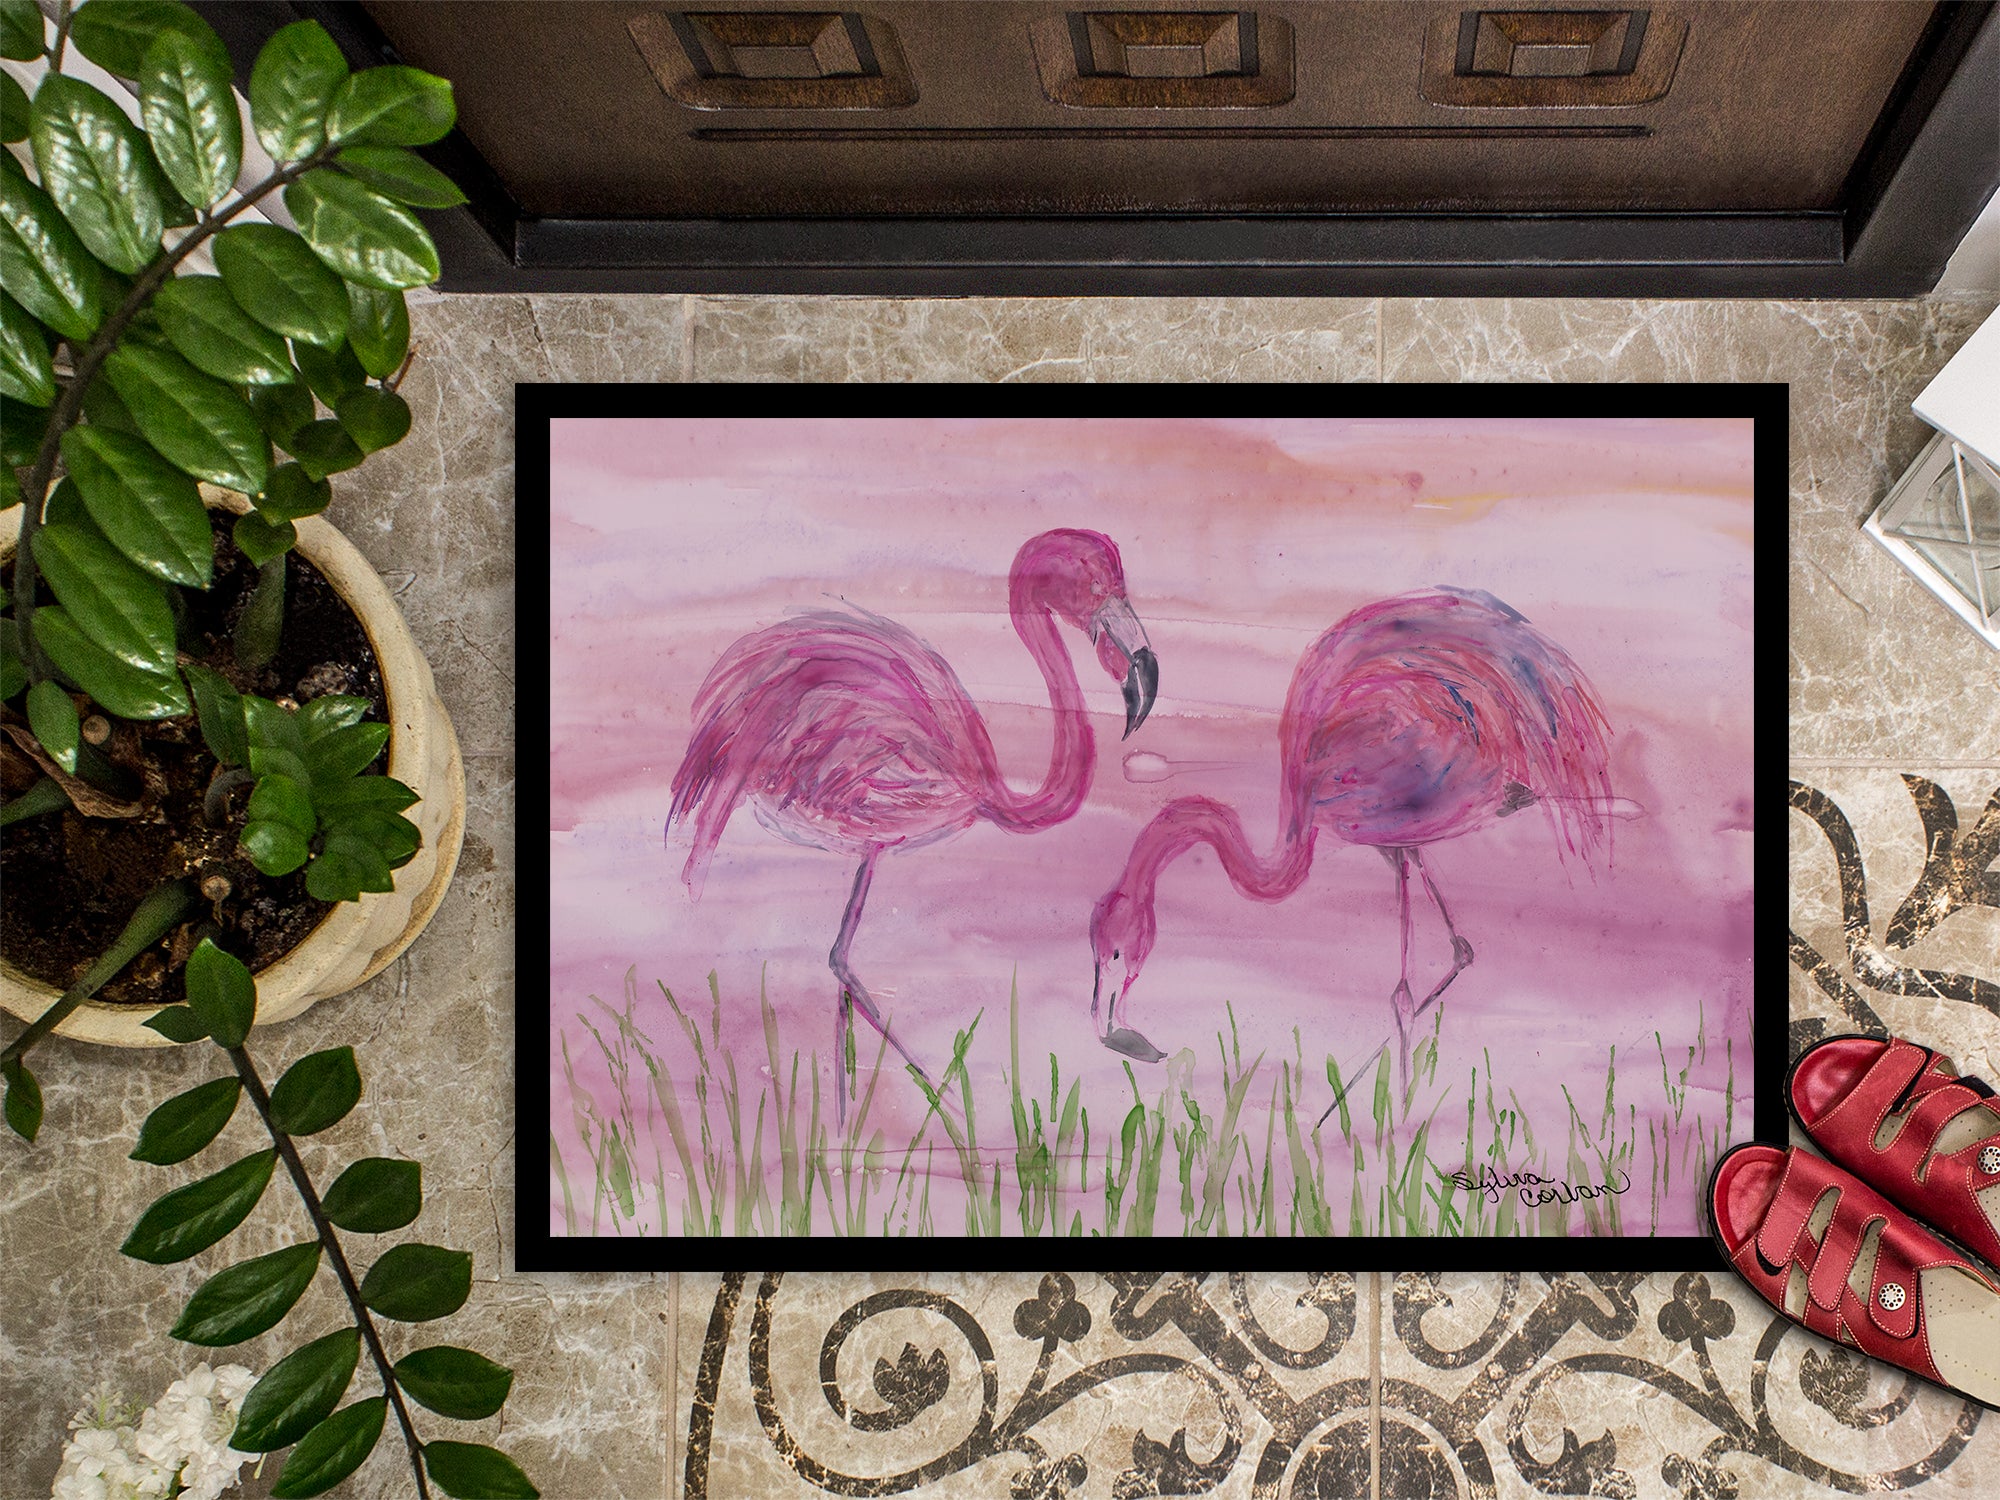 Flamingos Indoor or Outdoor Mat 18x27 SC2018MAT - the-store.com